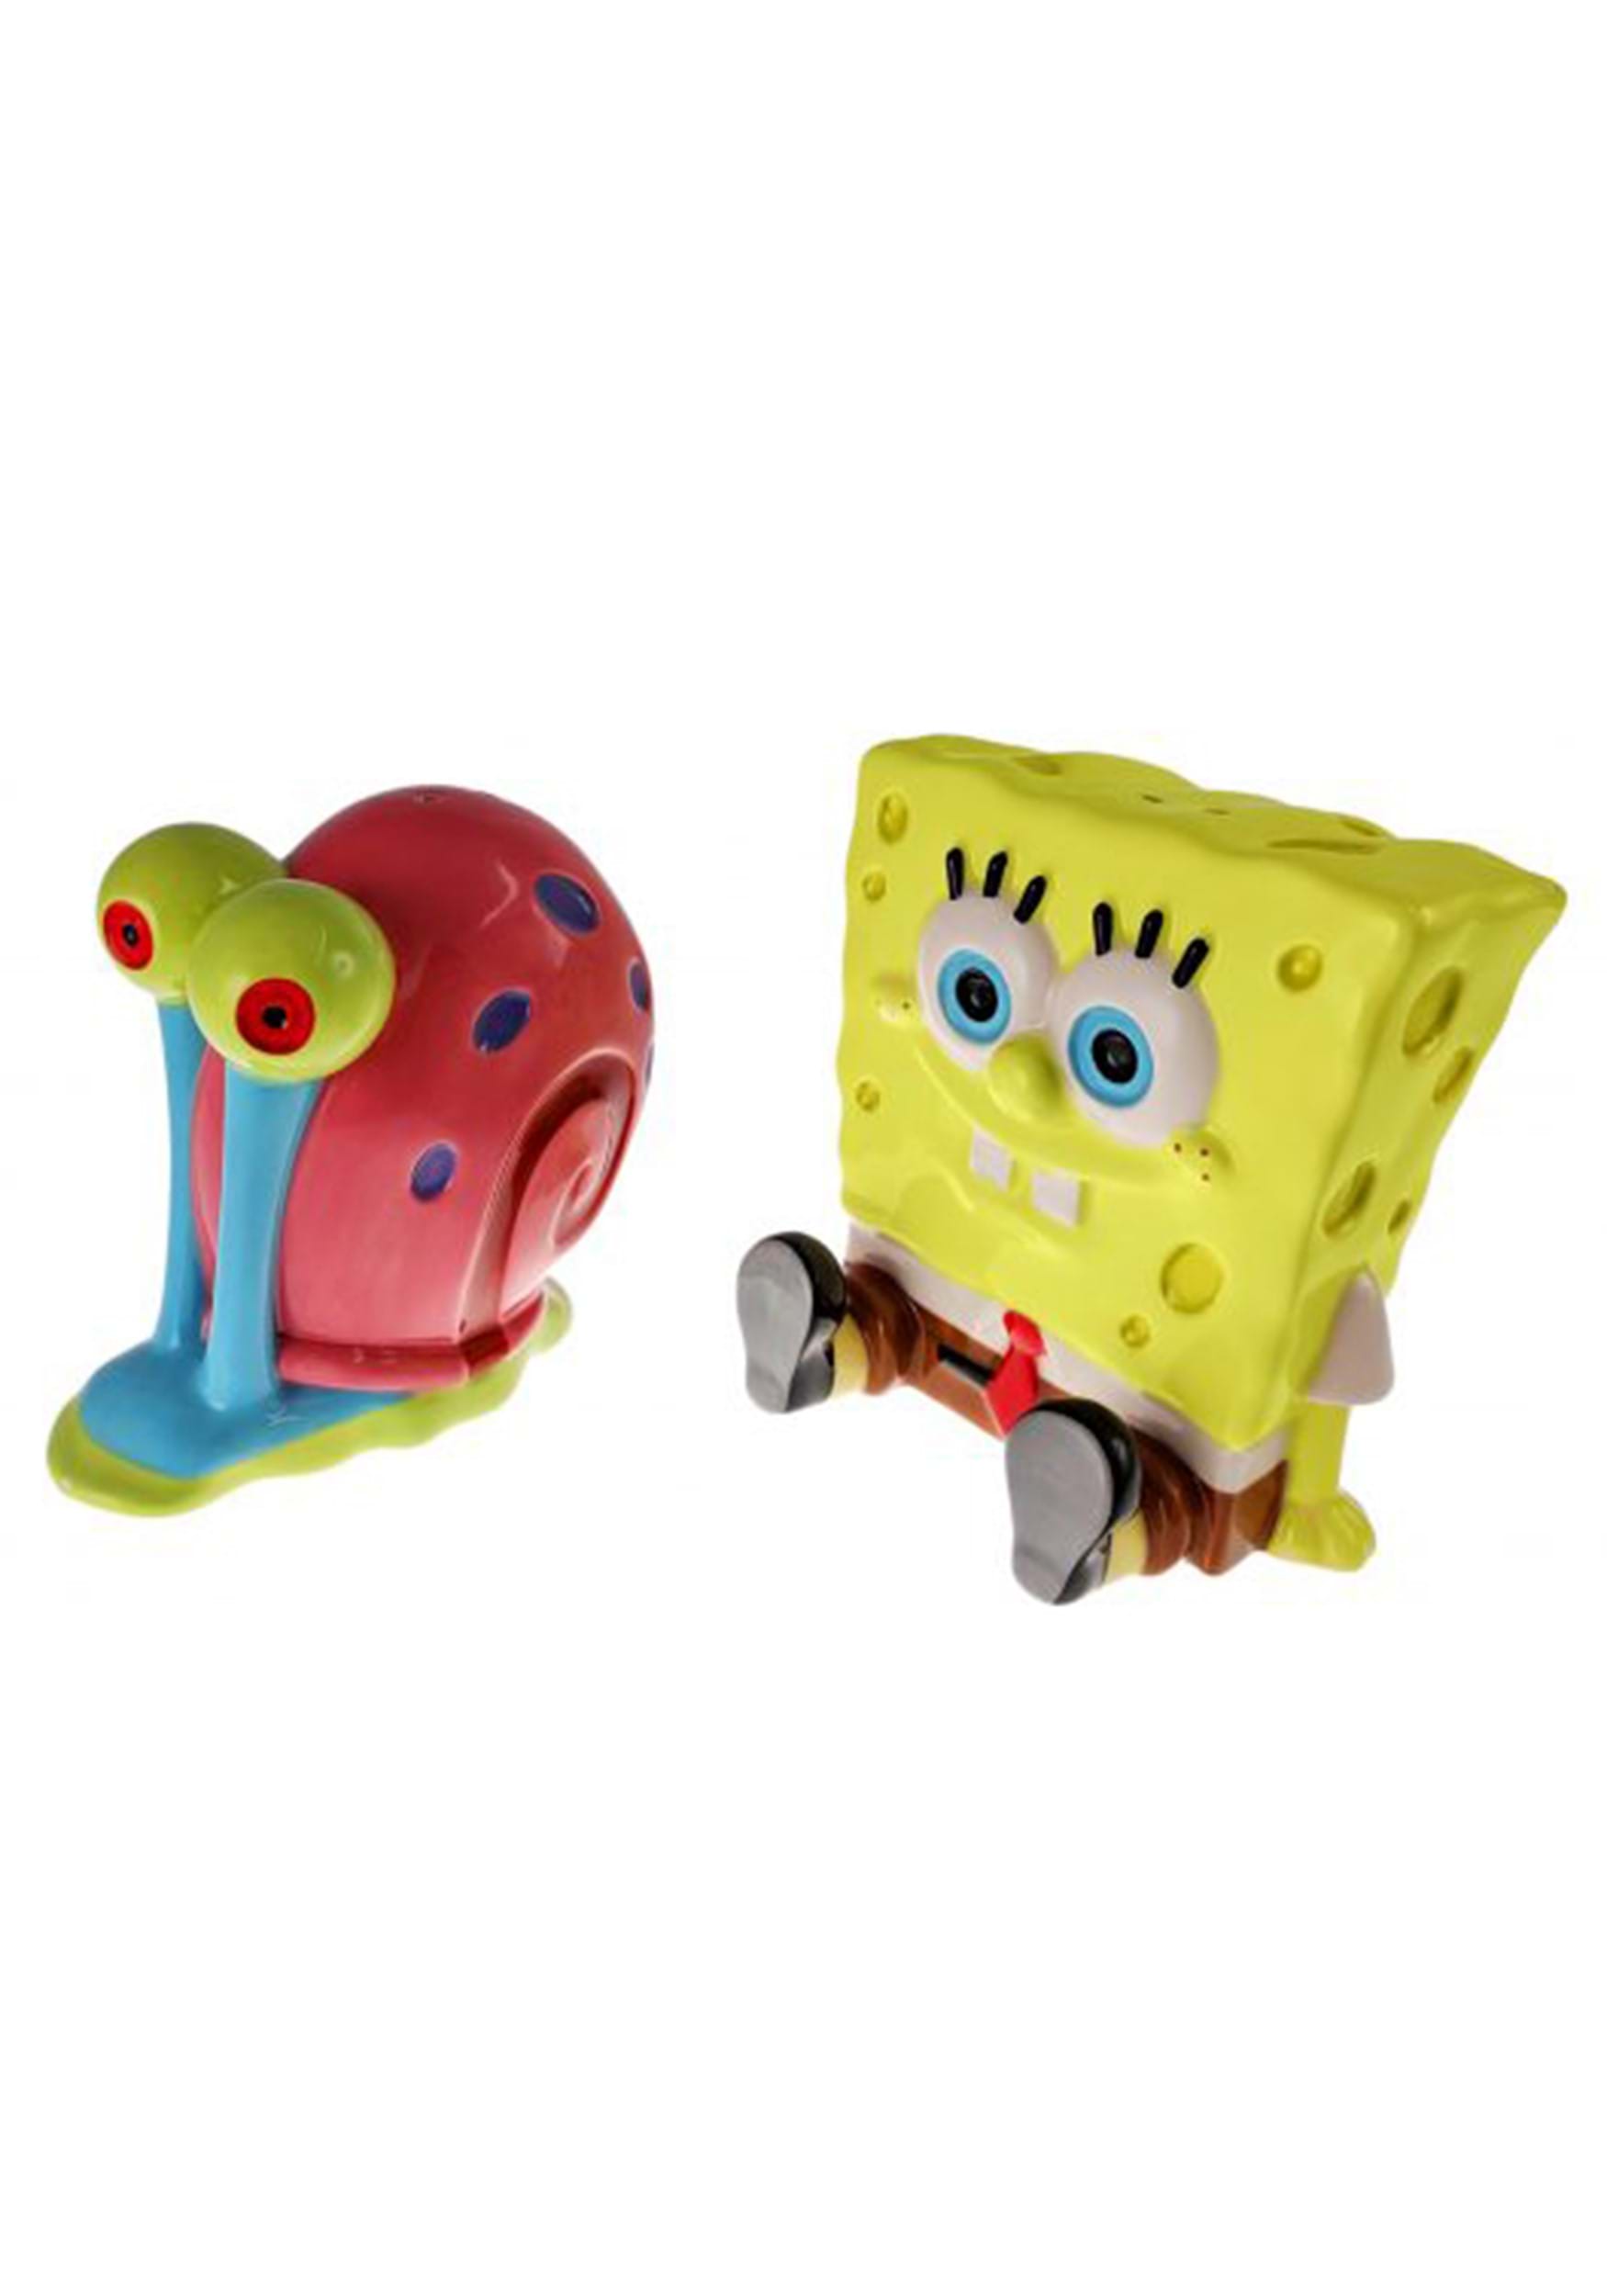 Spongebob Squarepants and Gary the Snail Salt and Pepper Shakers